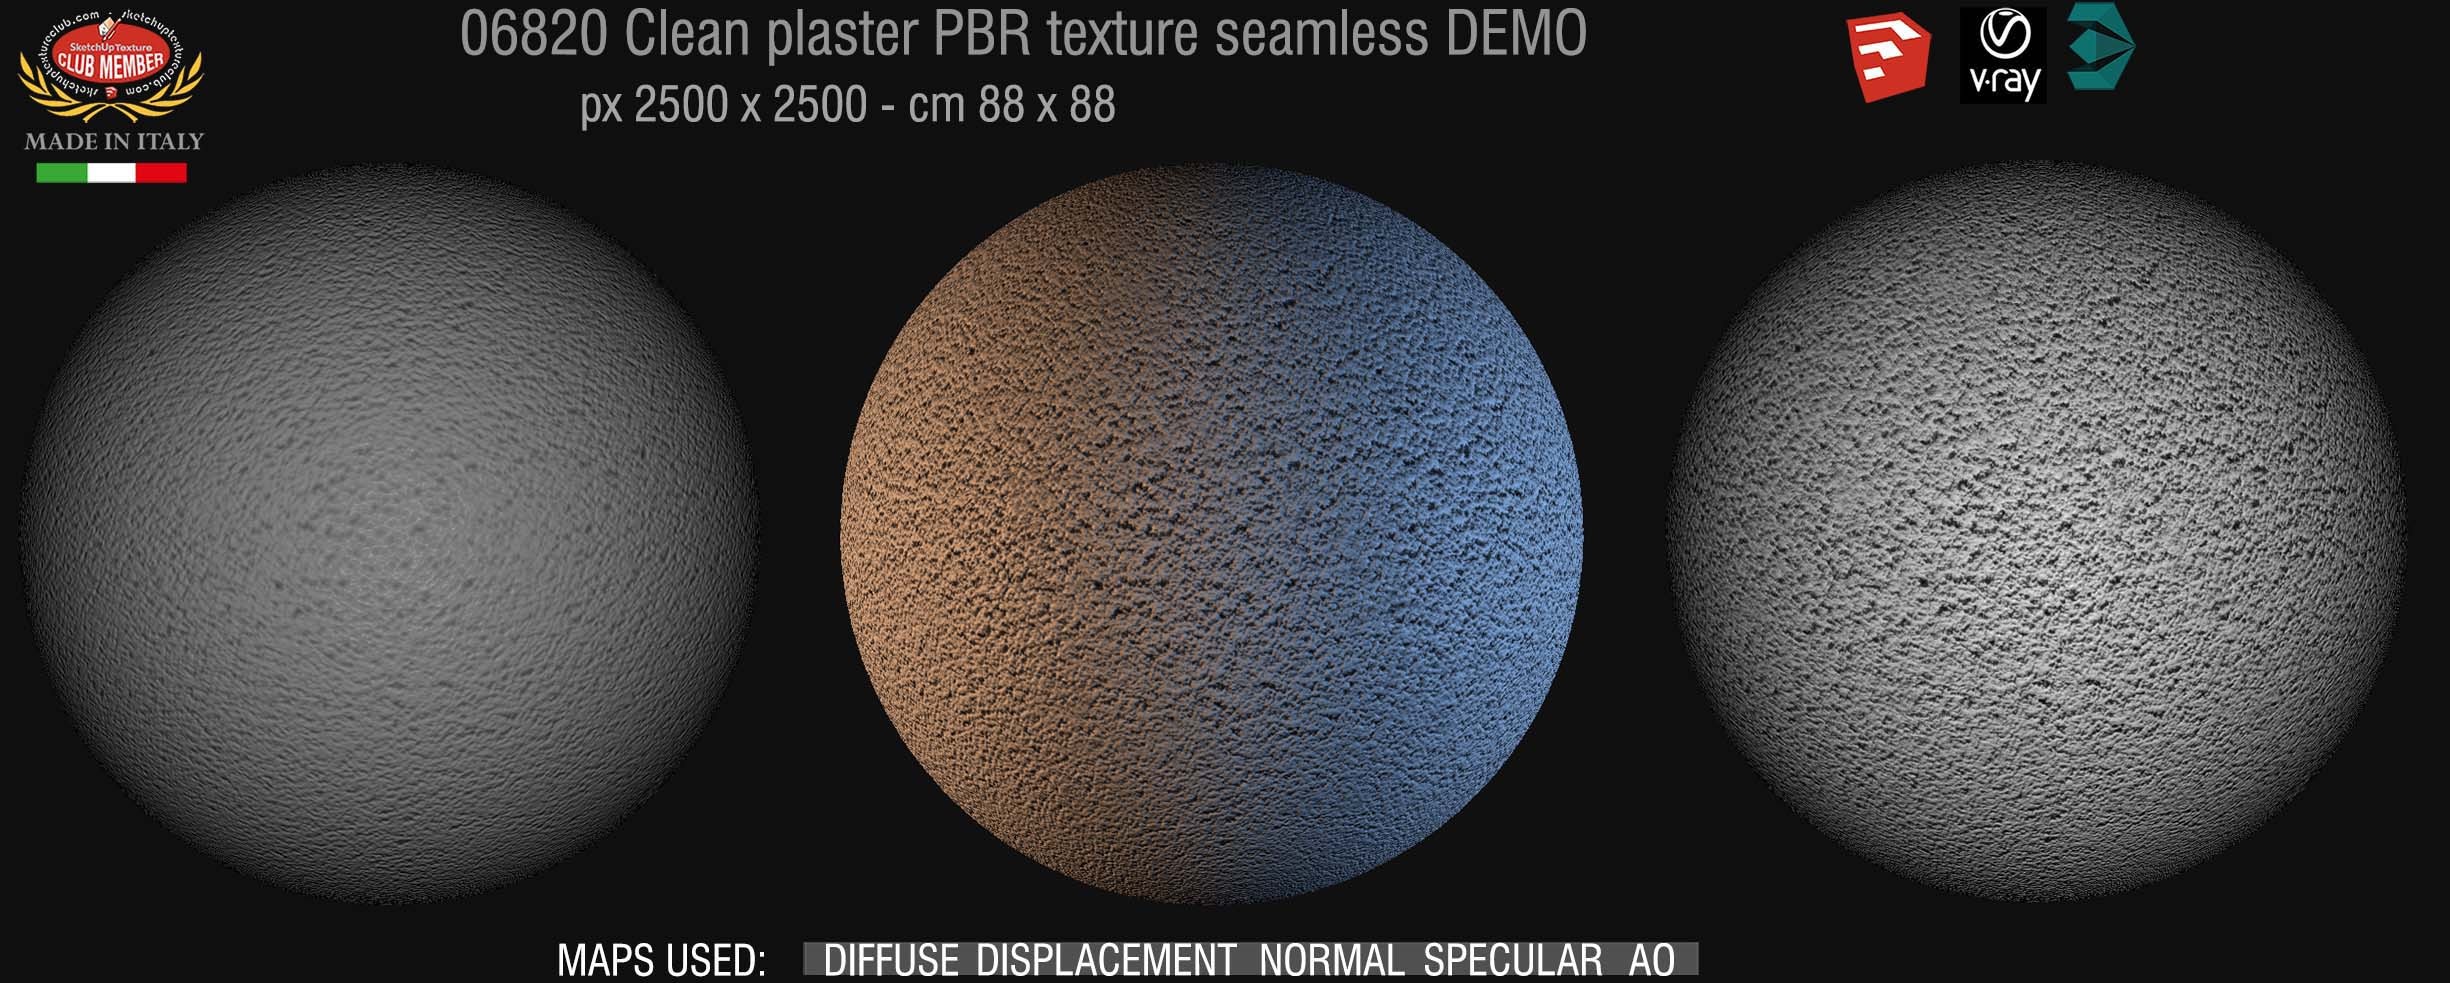 06820 Clean plaster PBR texture seamless DEMO